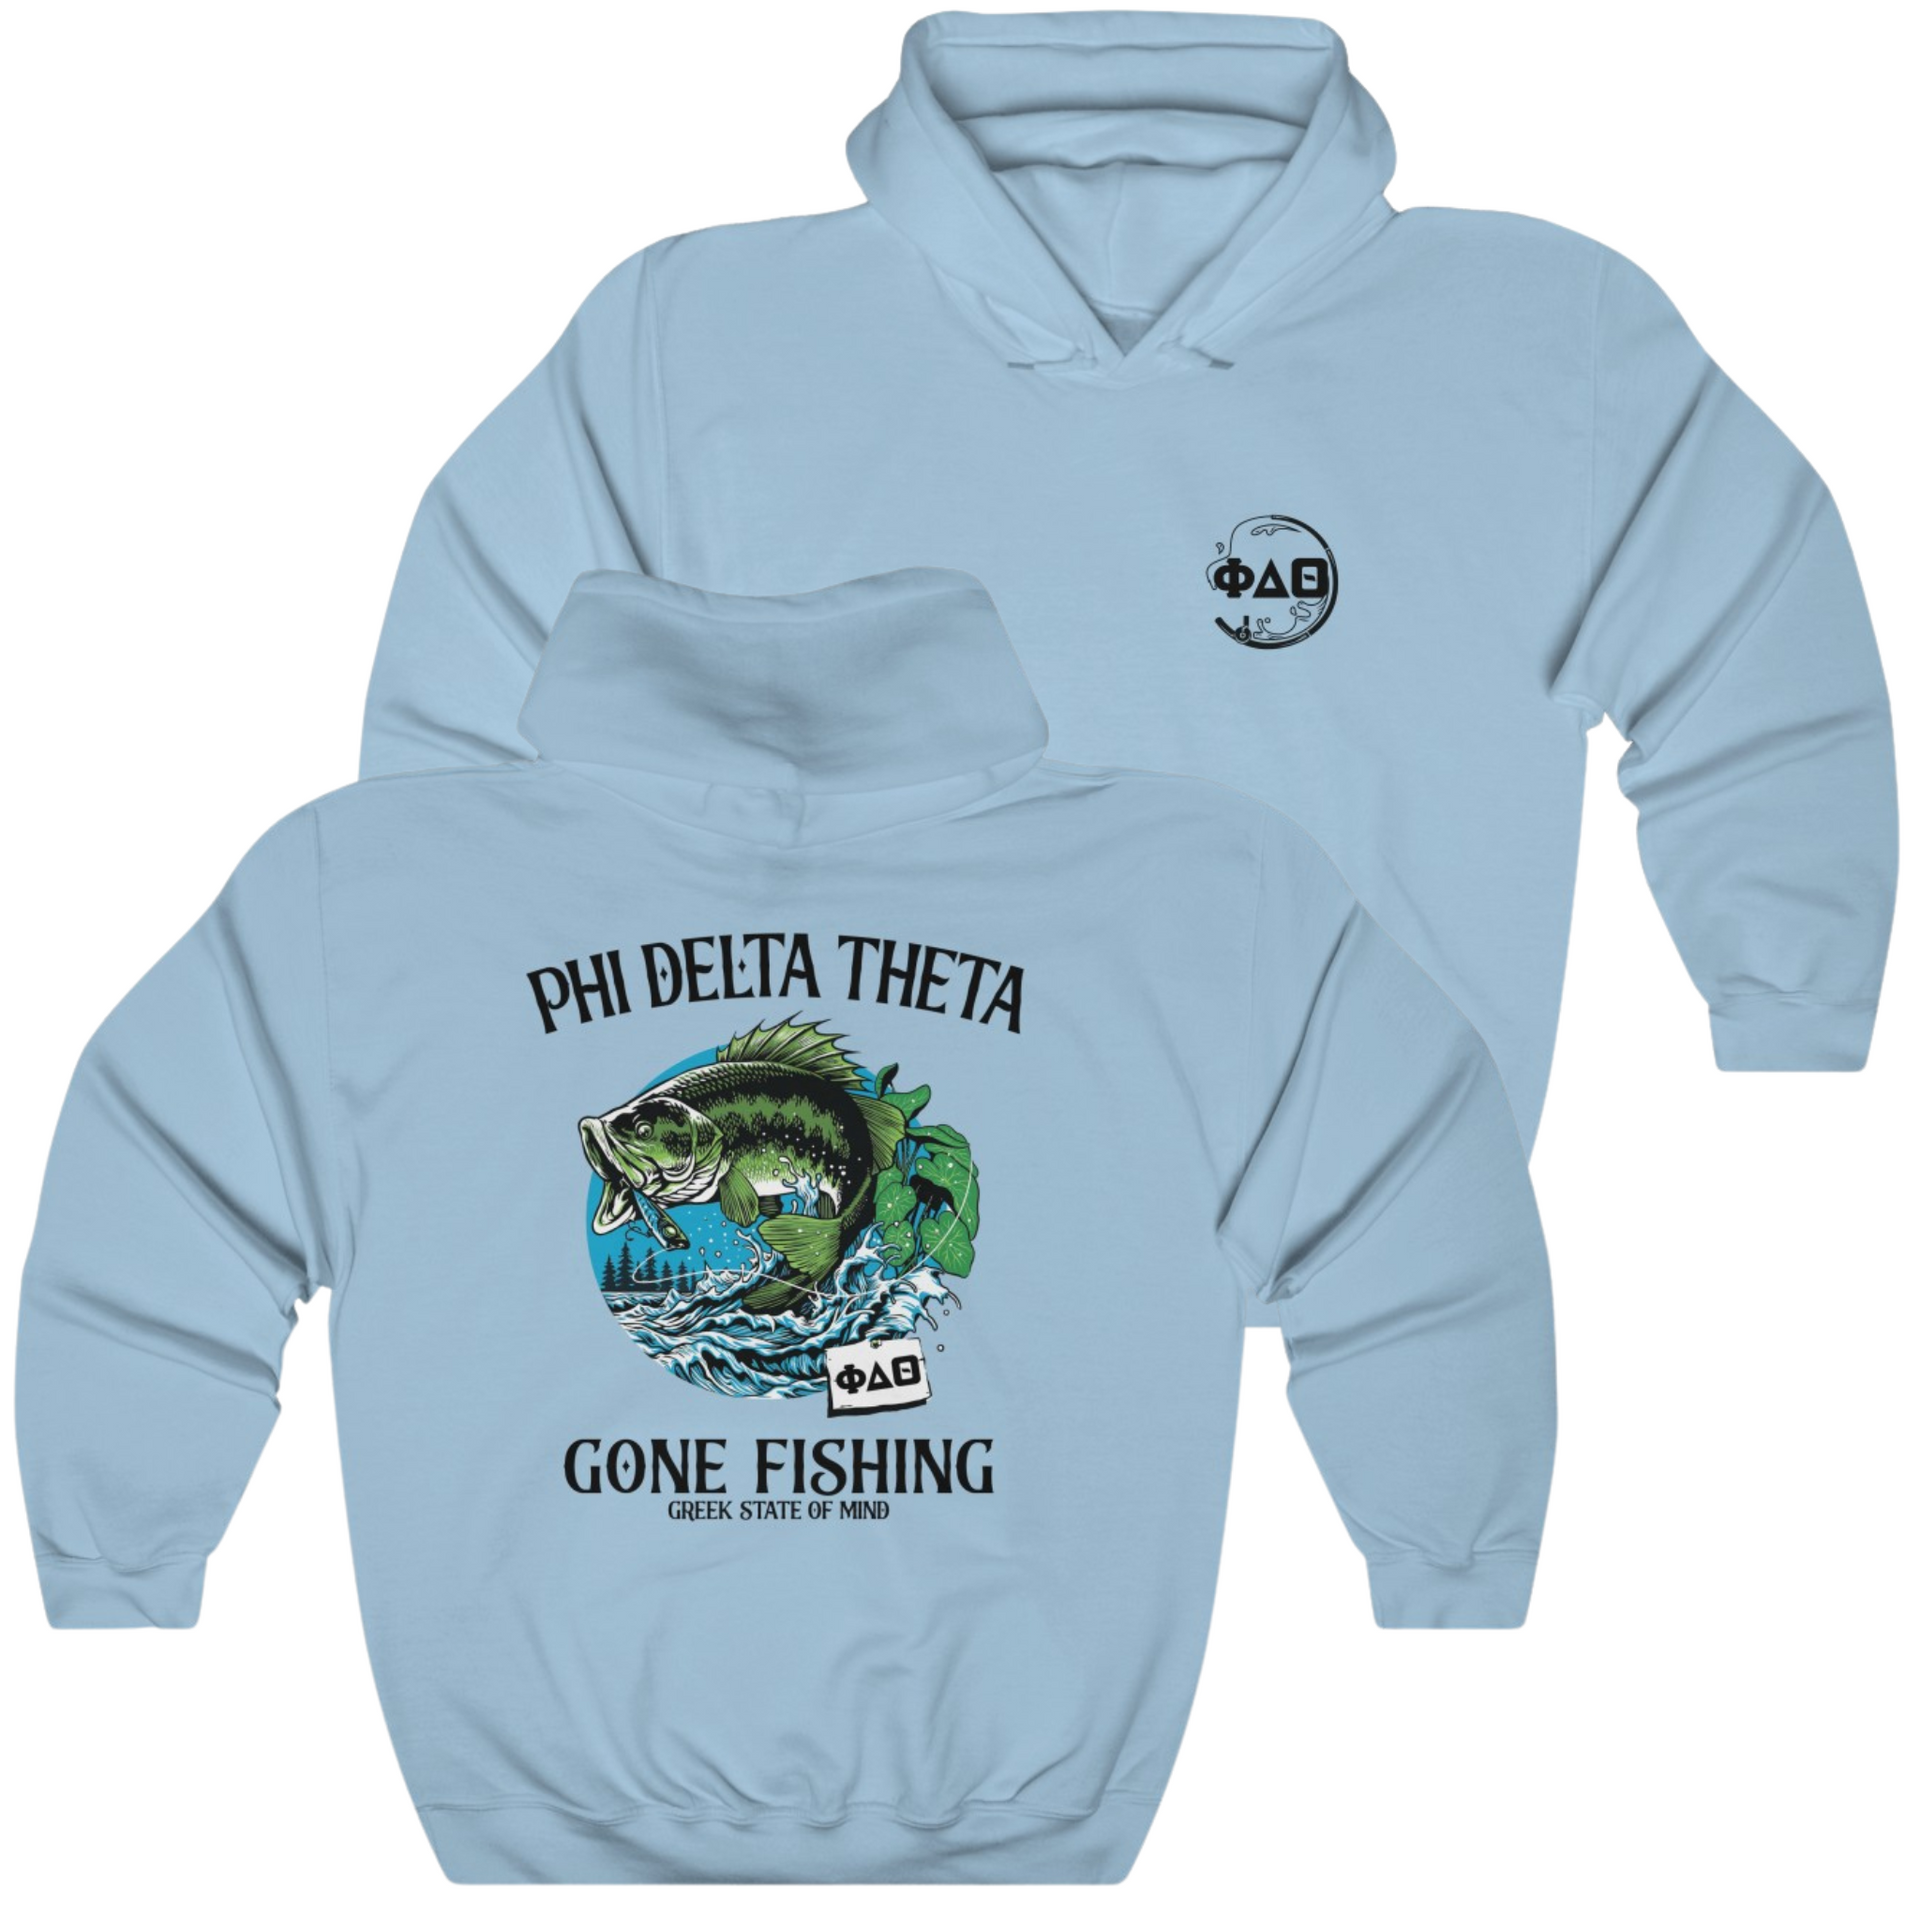 light blue Phi Delta Theta Graphic Hoodie | Gone Fishing | phi delta theta fraternity greek apparel